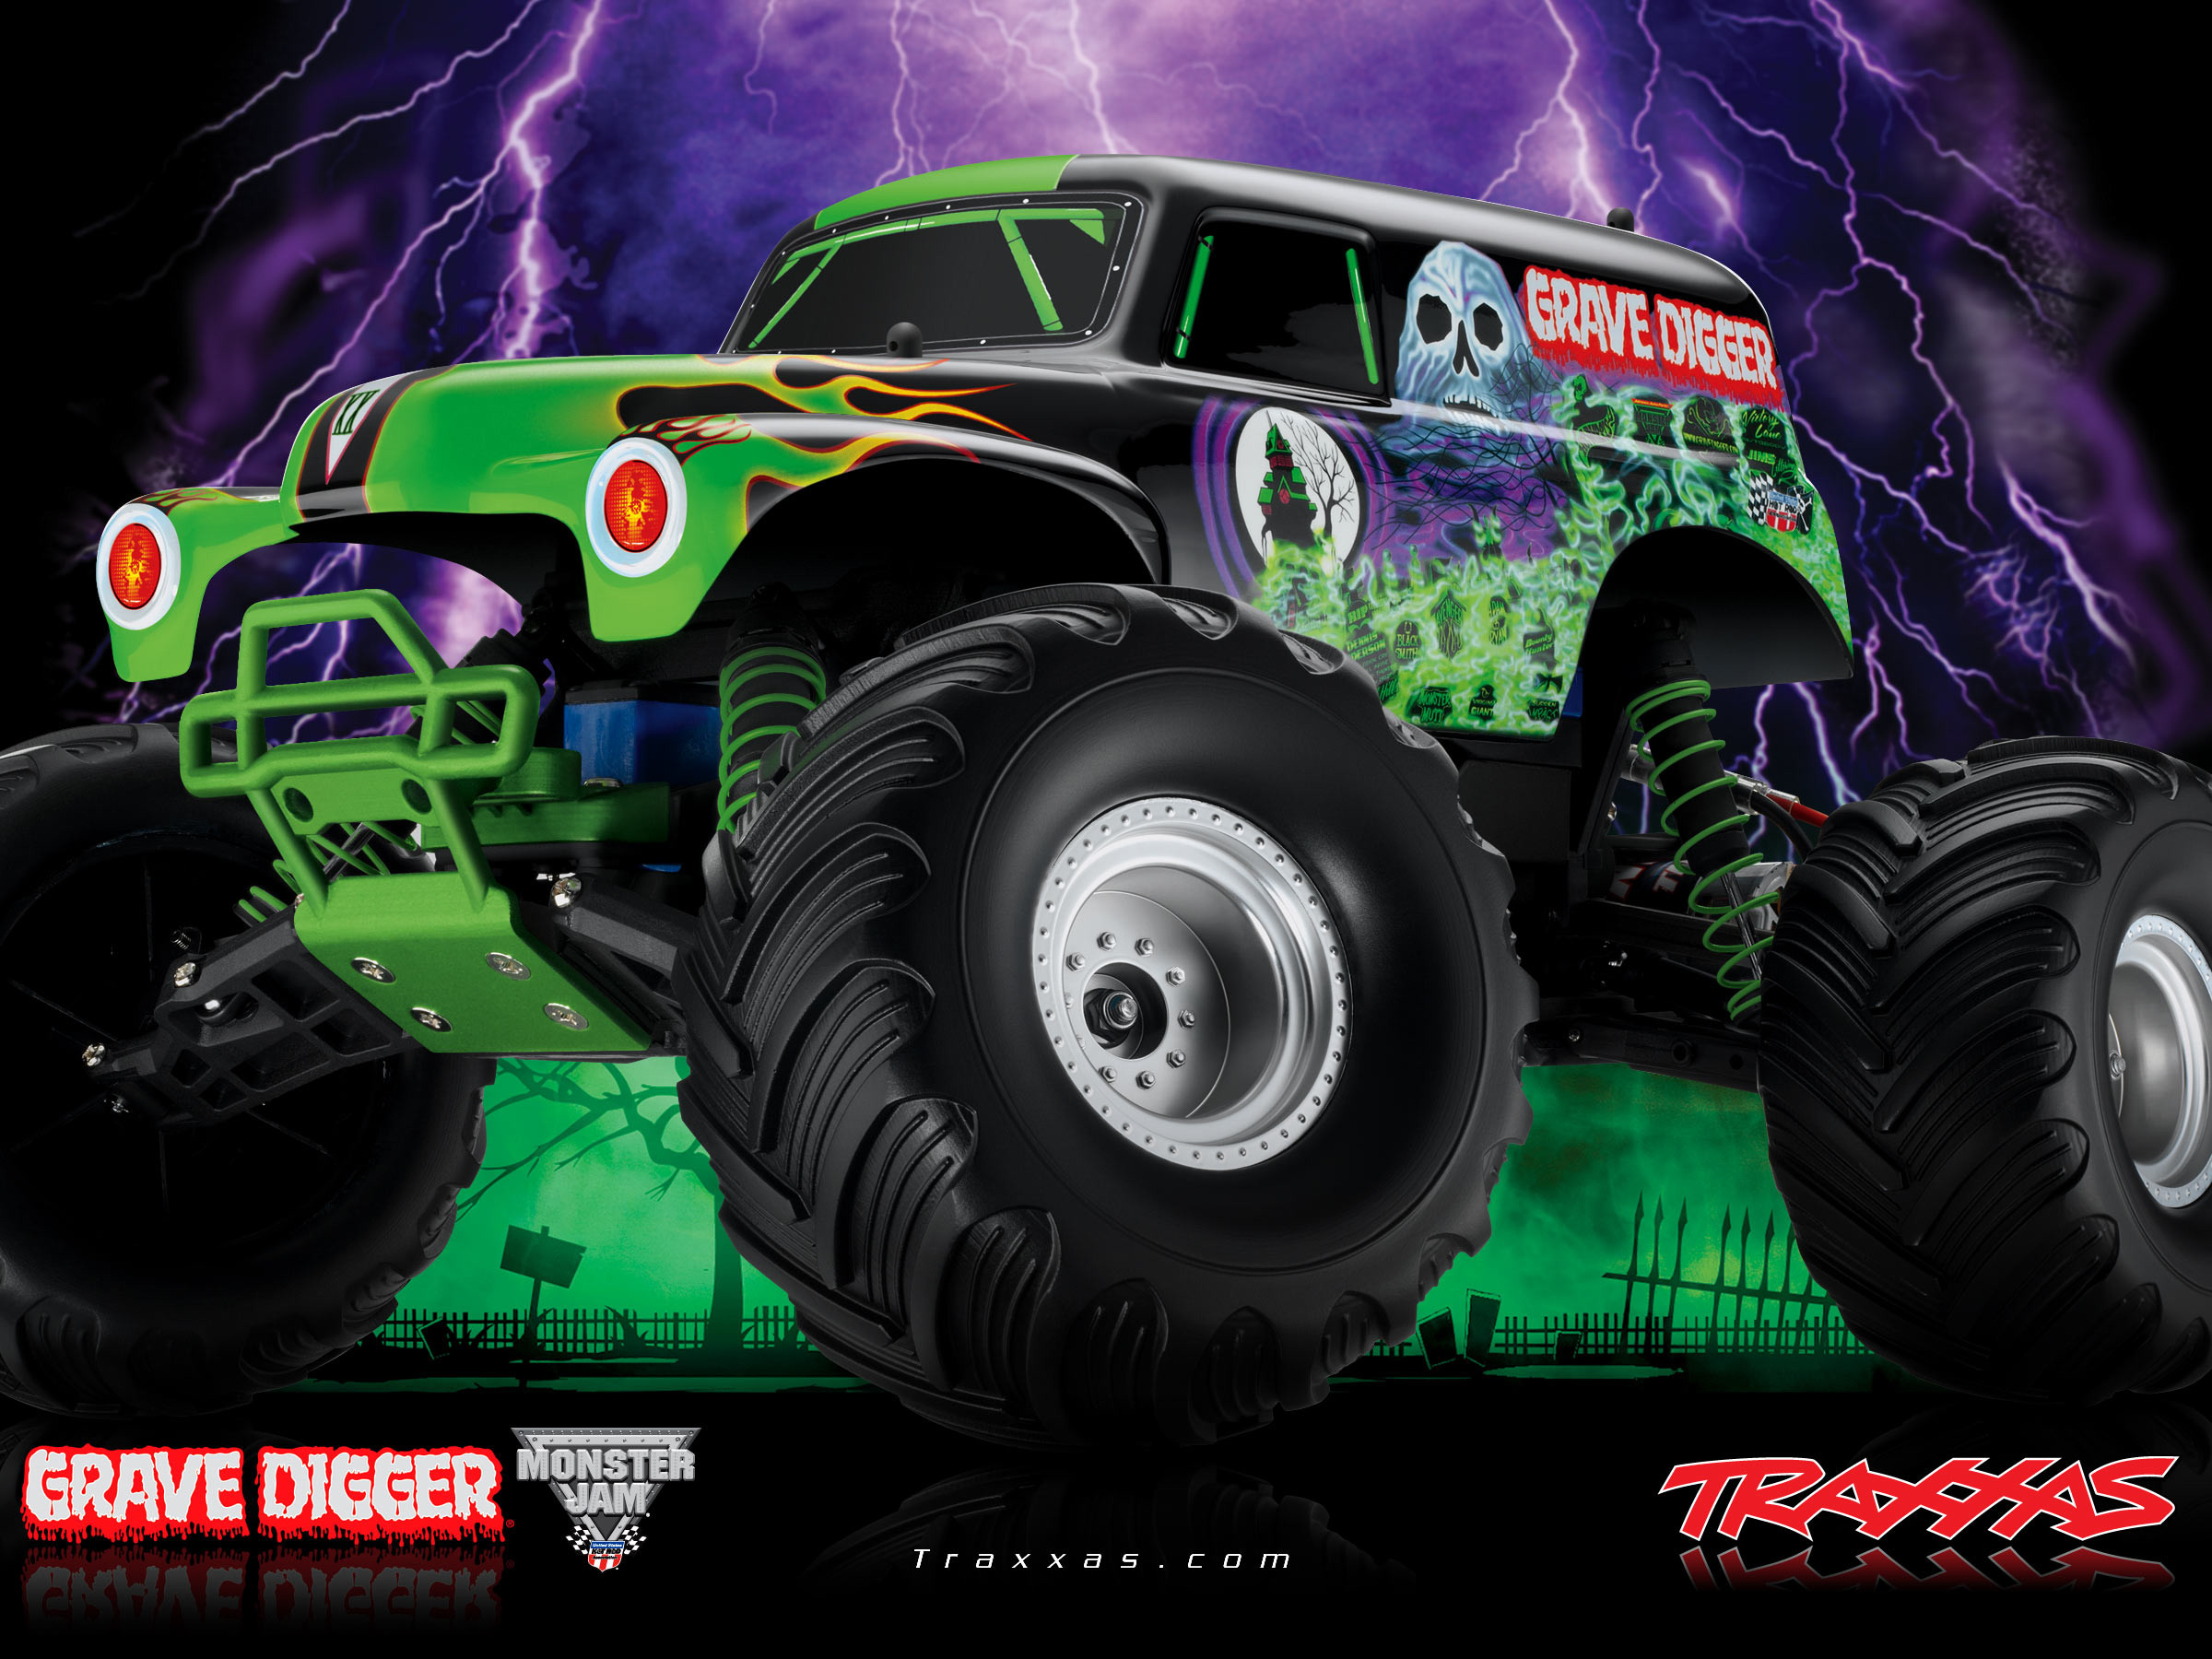 2400x1800, Grave Digger Monster Truck Race Racing Monster - Grave Digger Monster Truck Background - HD Wallpaper 